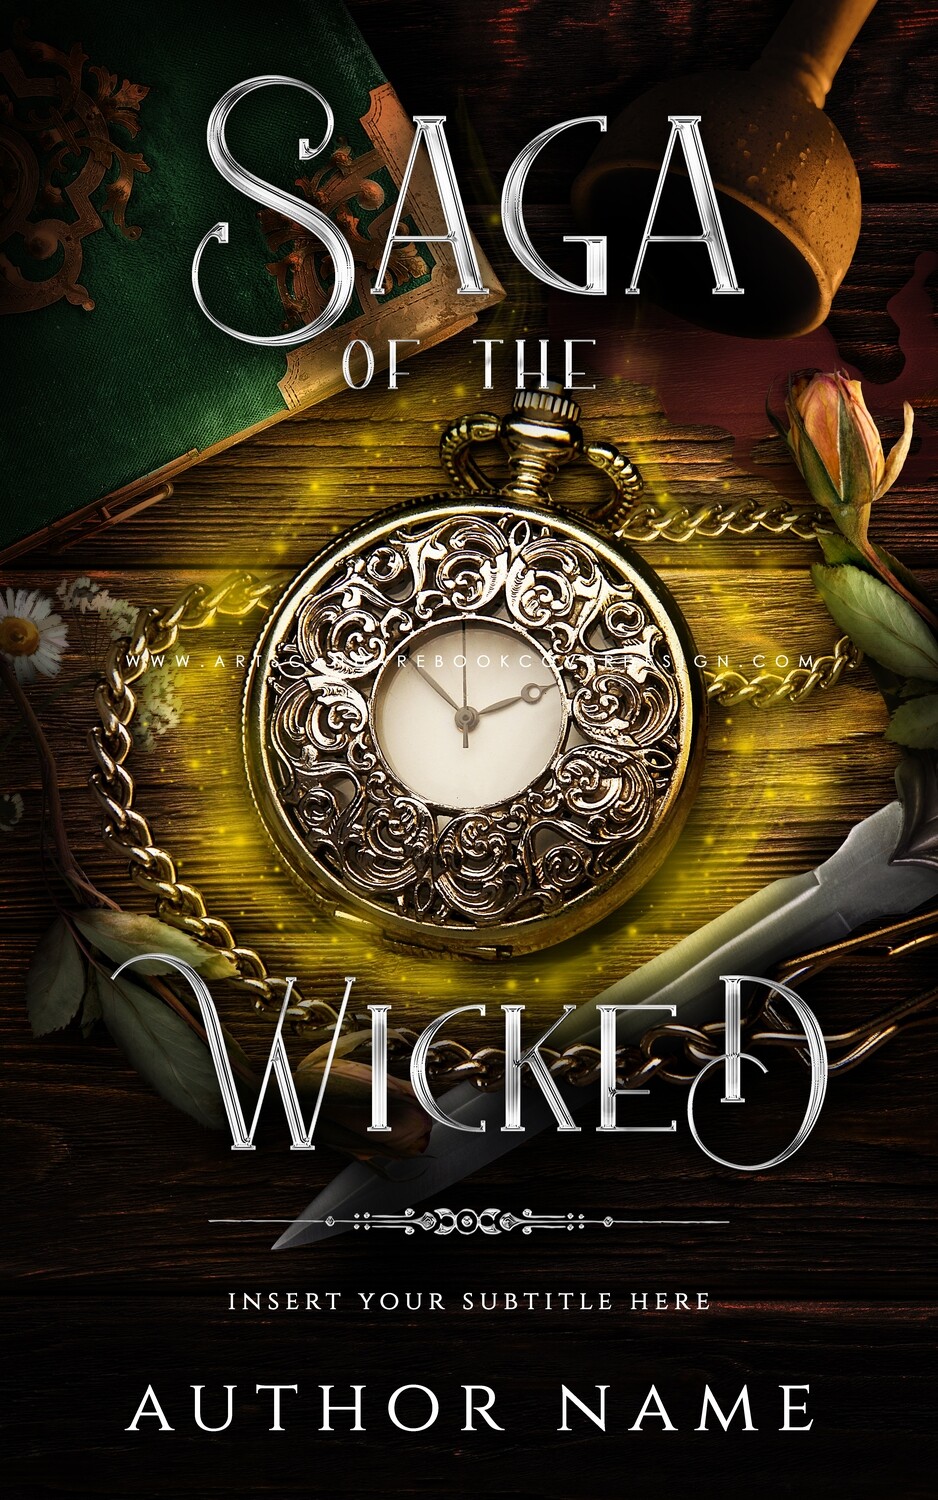 Ebook: Saga of the Wicked